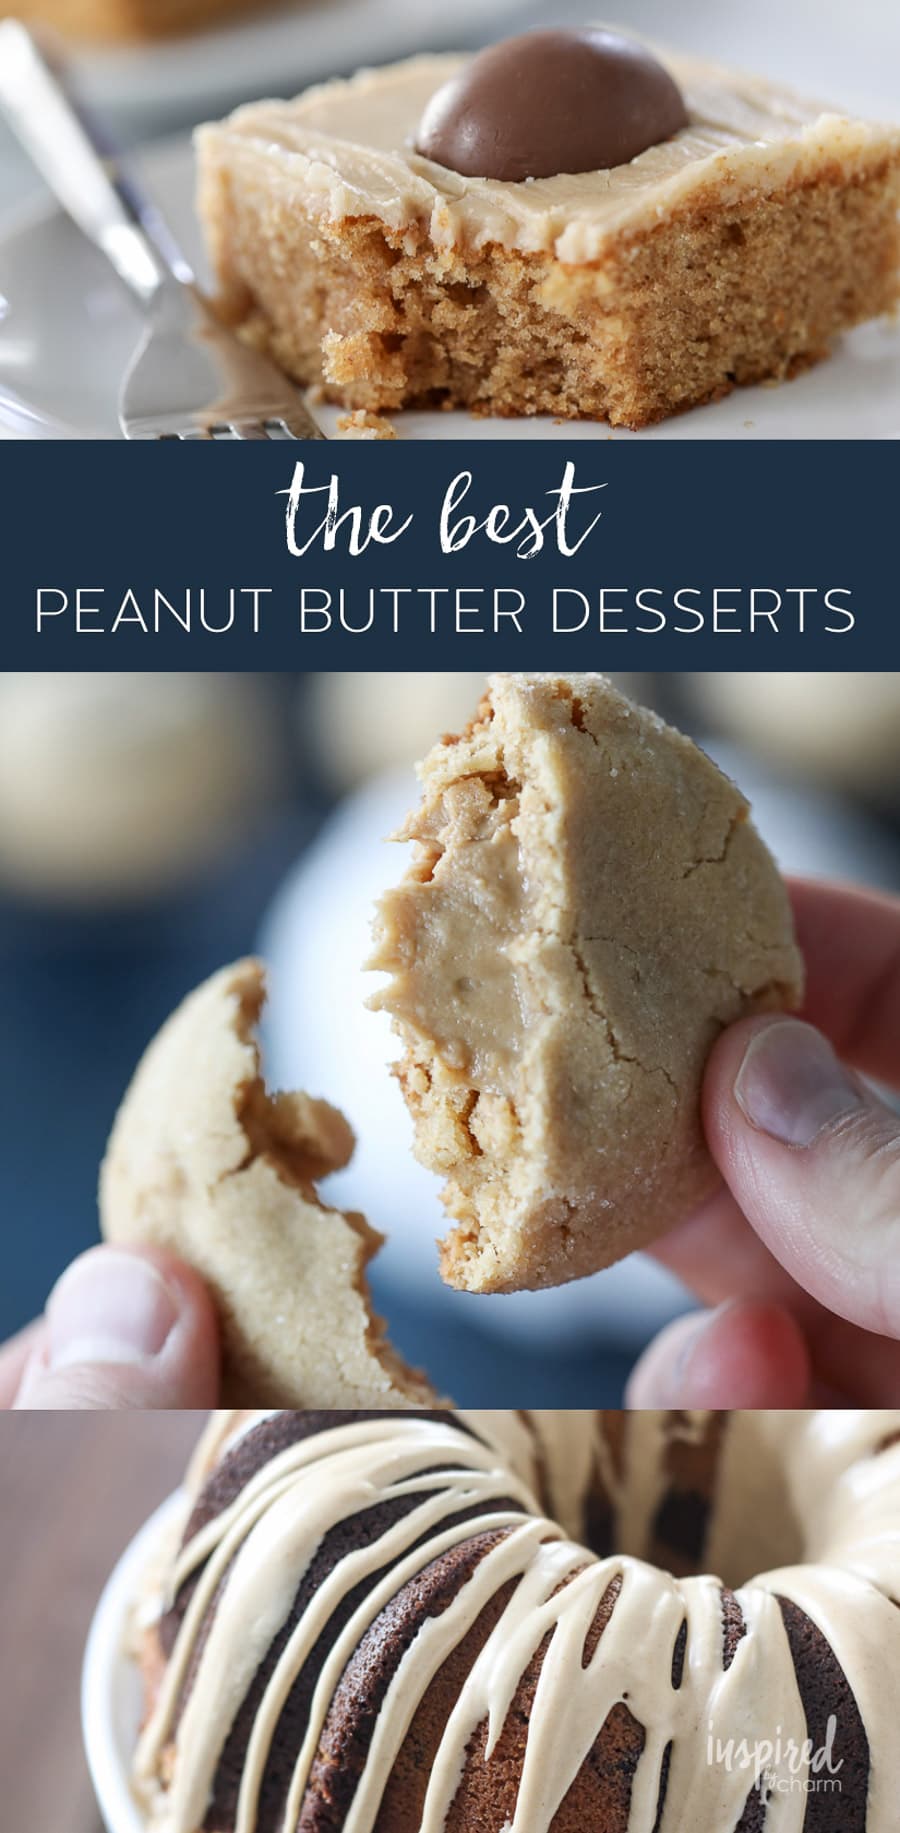 The Best Peanut Butter Desserts - My Favorite Peanut Butter Desserts #peanutbutter #cake #dessert #recipe #cookie #snack #desserts